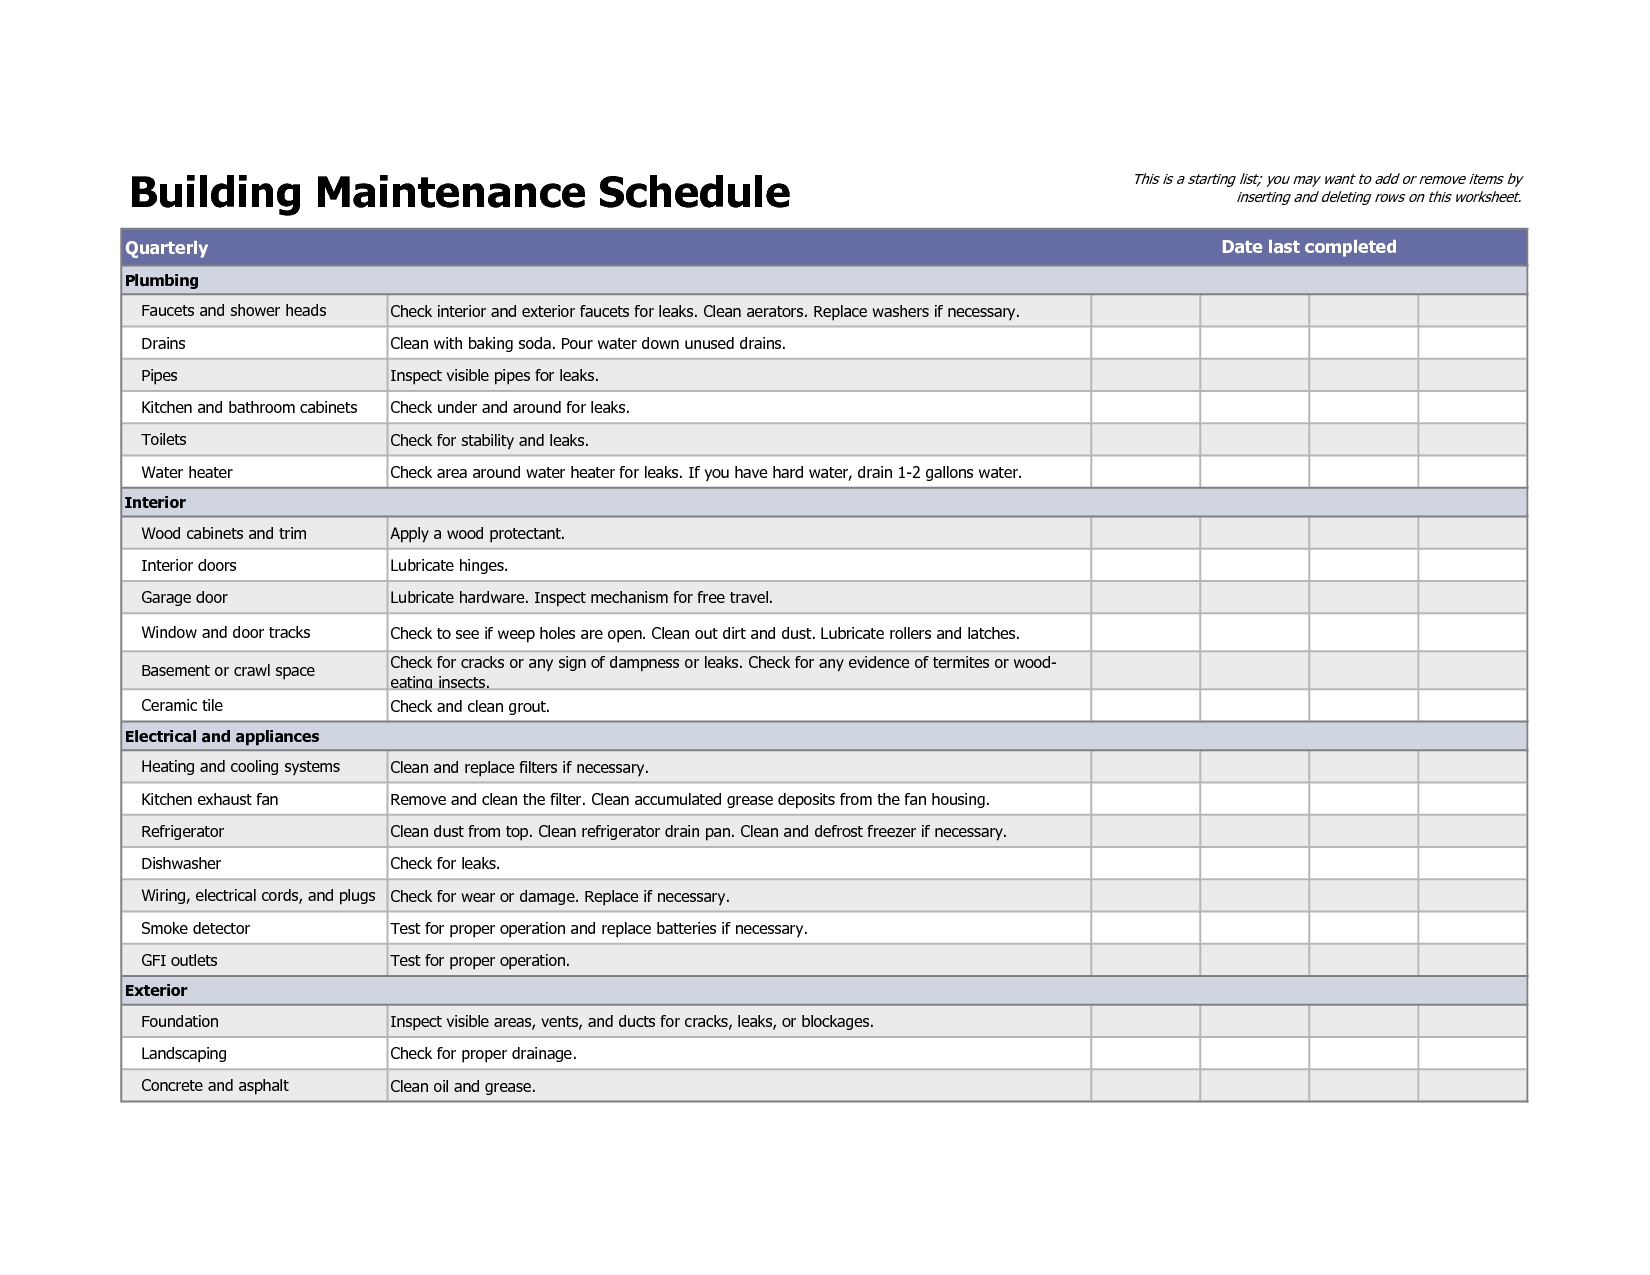 Building Maintenance Schedule Excel Template | Home Maintenance 